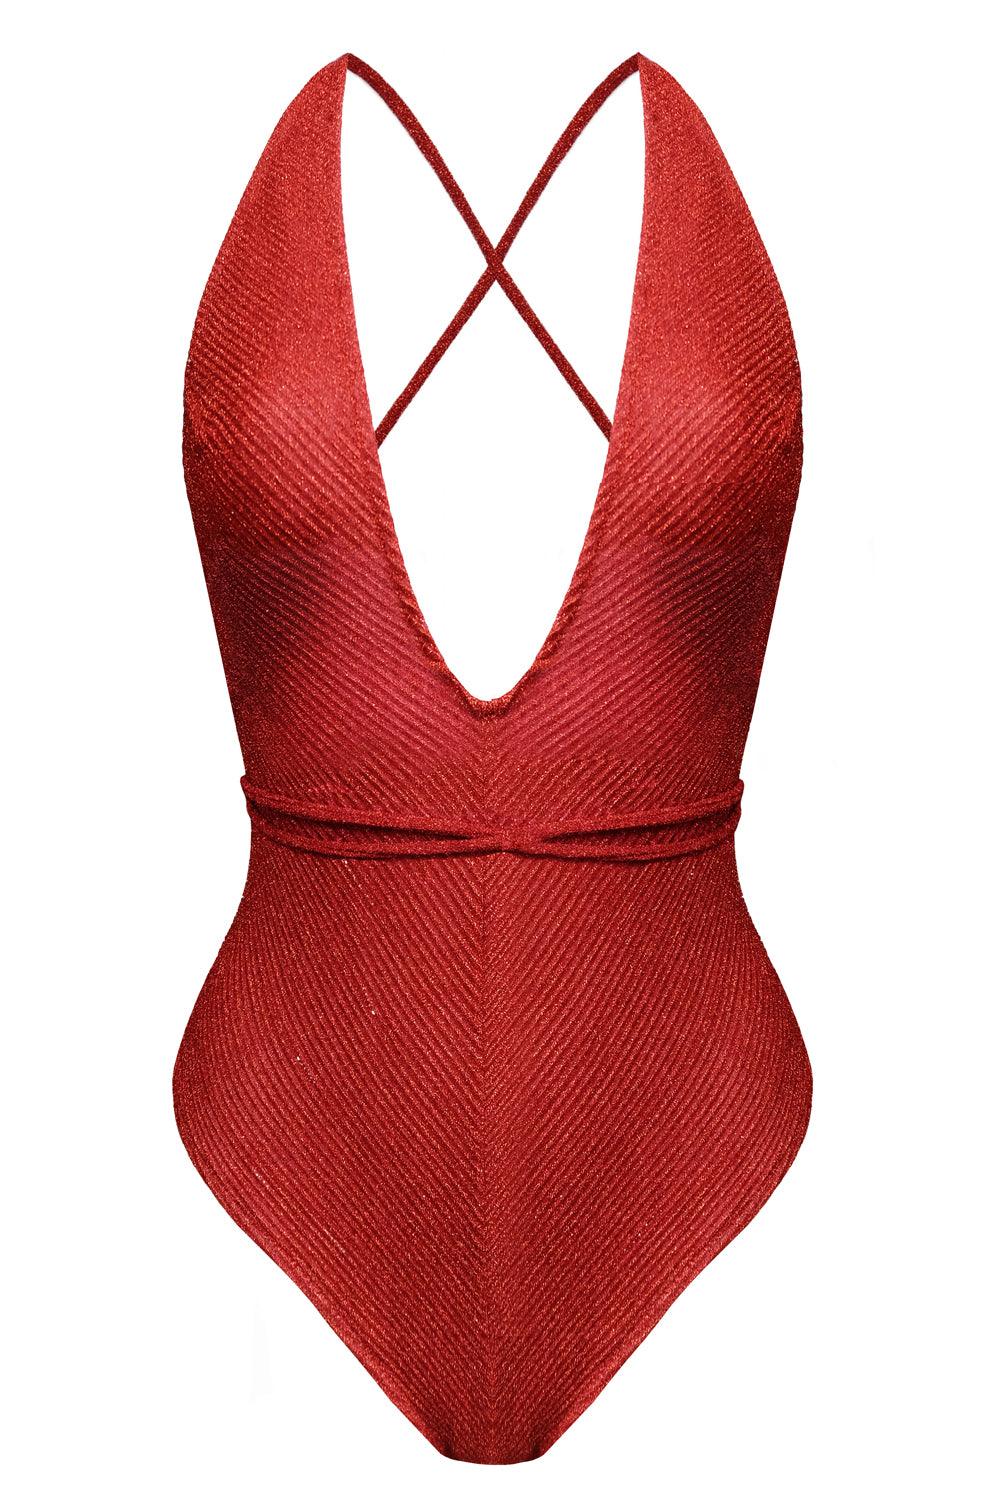 Boney Scarlet swimsuit - One Piece swimsuit by yesUndress. Shop on yesUndress